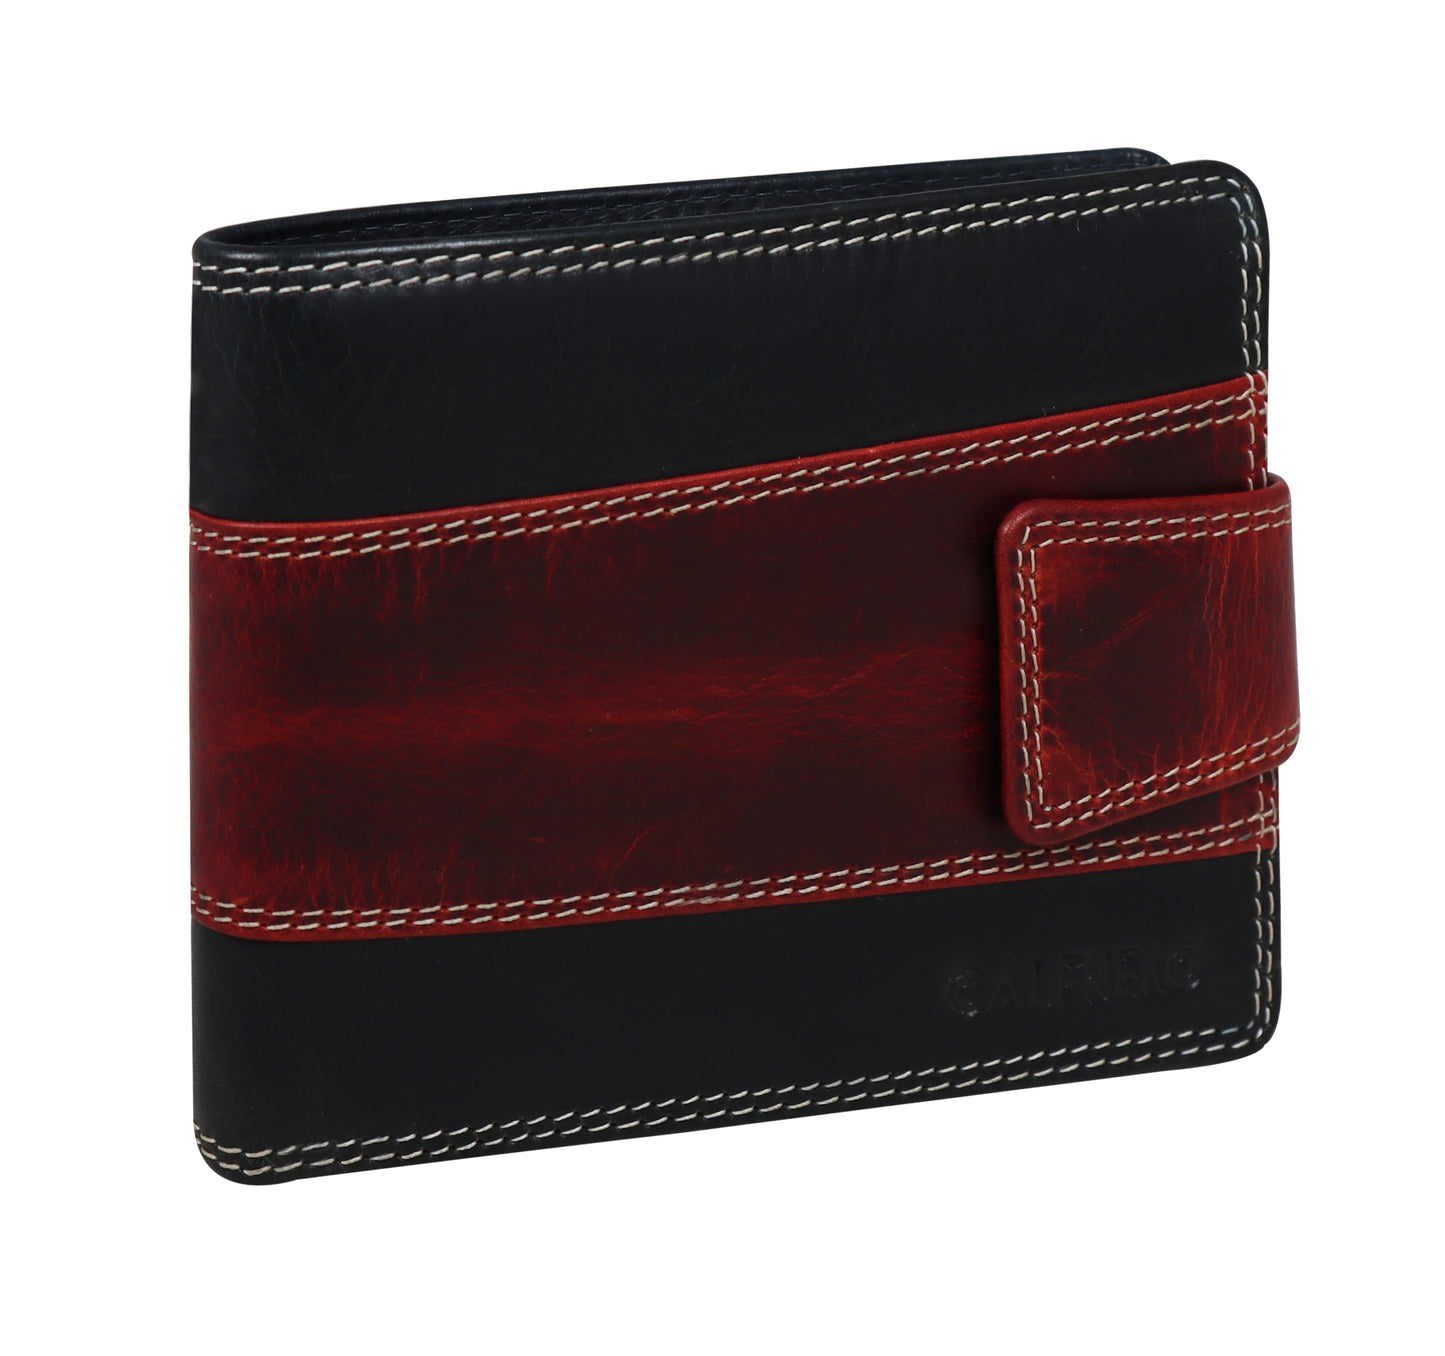 Calfnero Genuine Leather Men's Wallet (01-177)